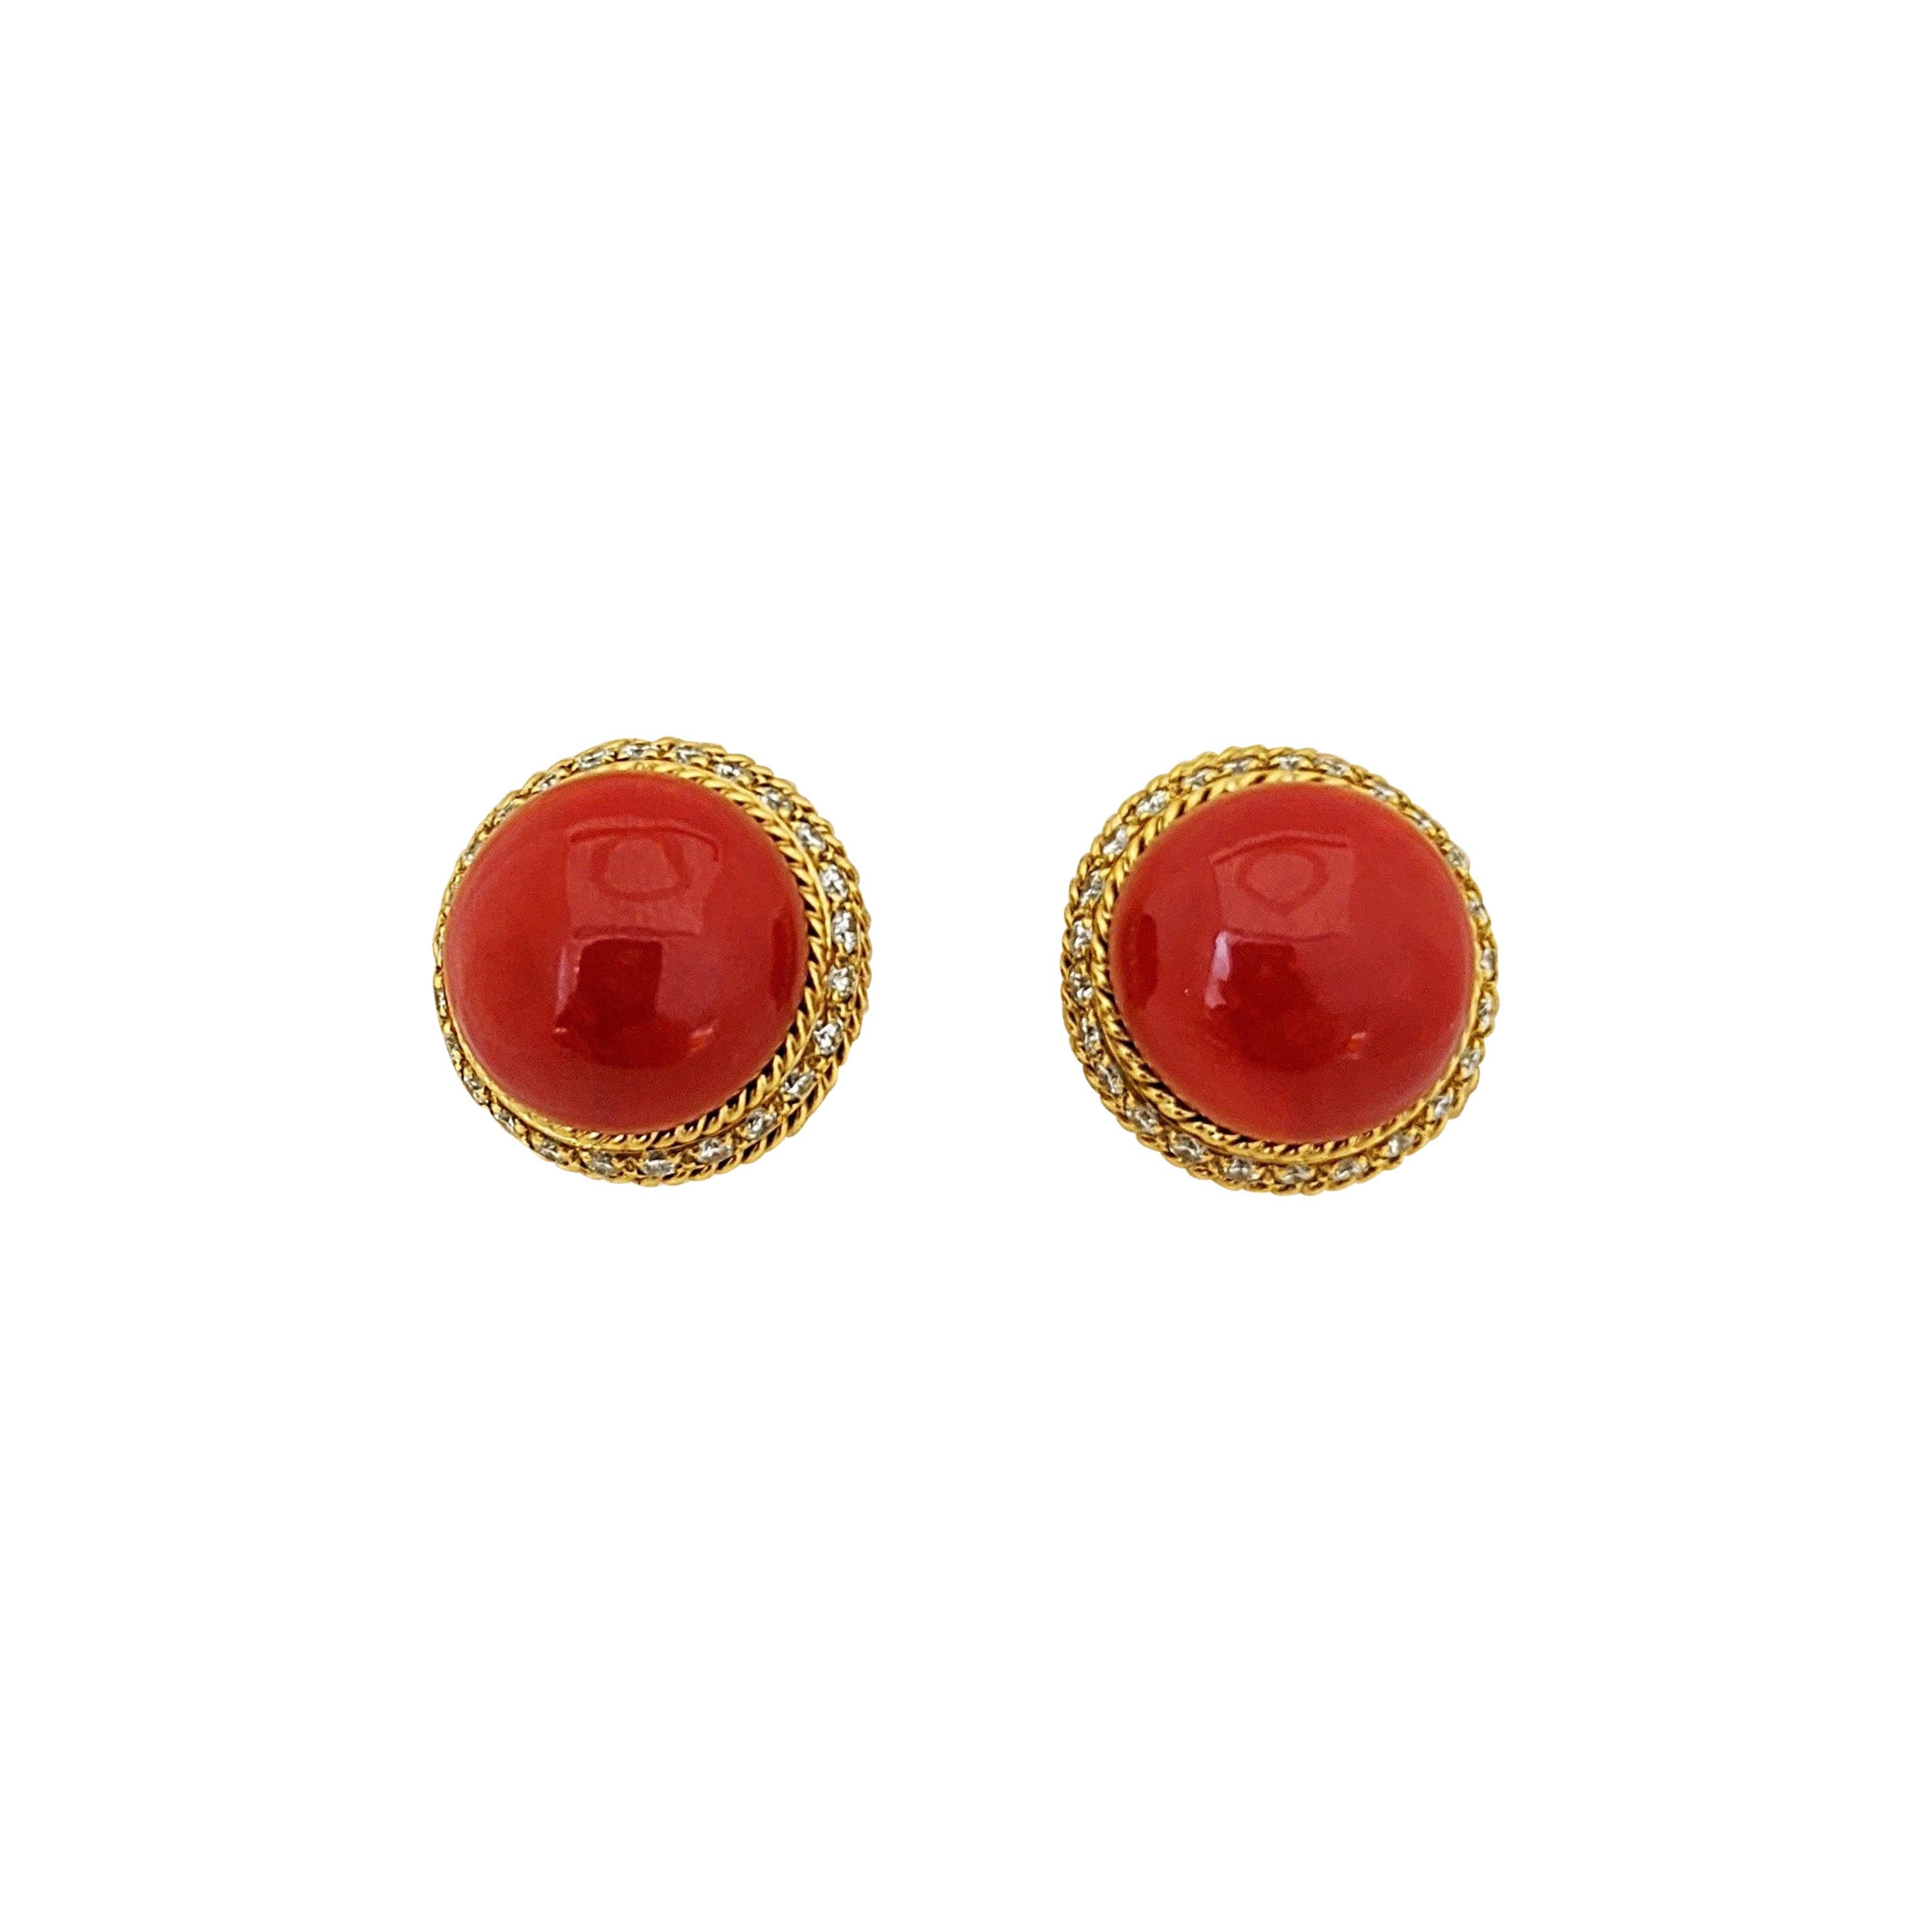 18 Karat Yellow Gold Oxblood Coral Earrings with 2.08 Carat Diamonds